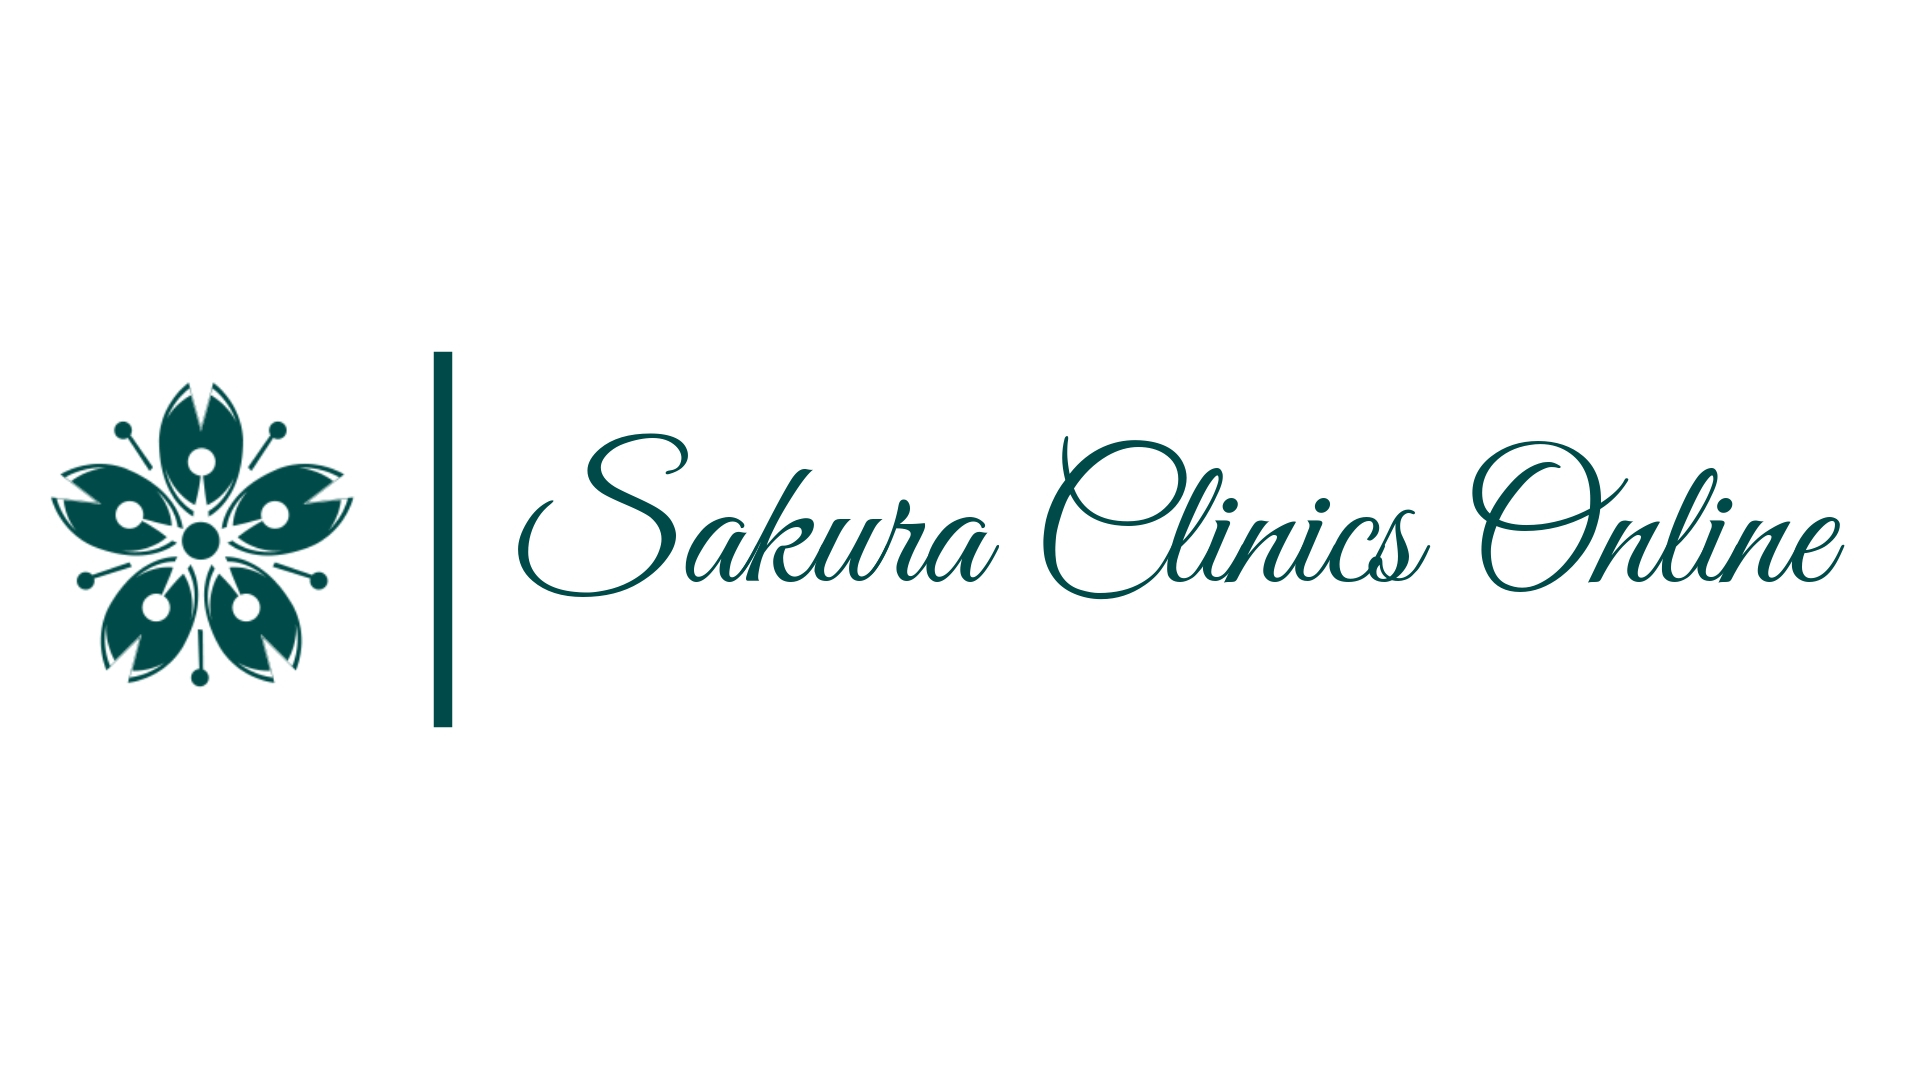 Sakura Clinics Online